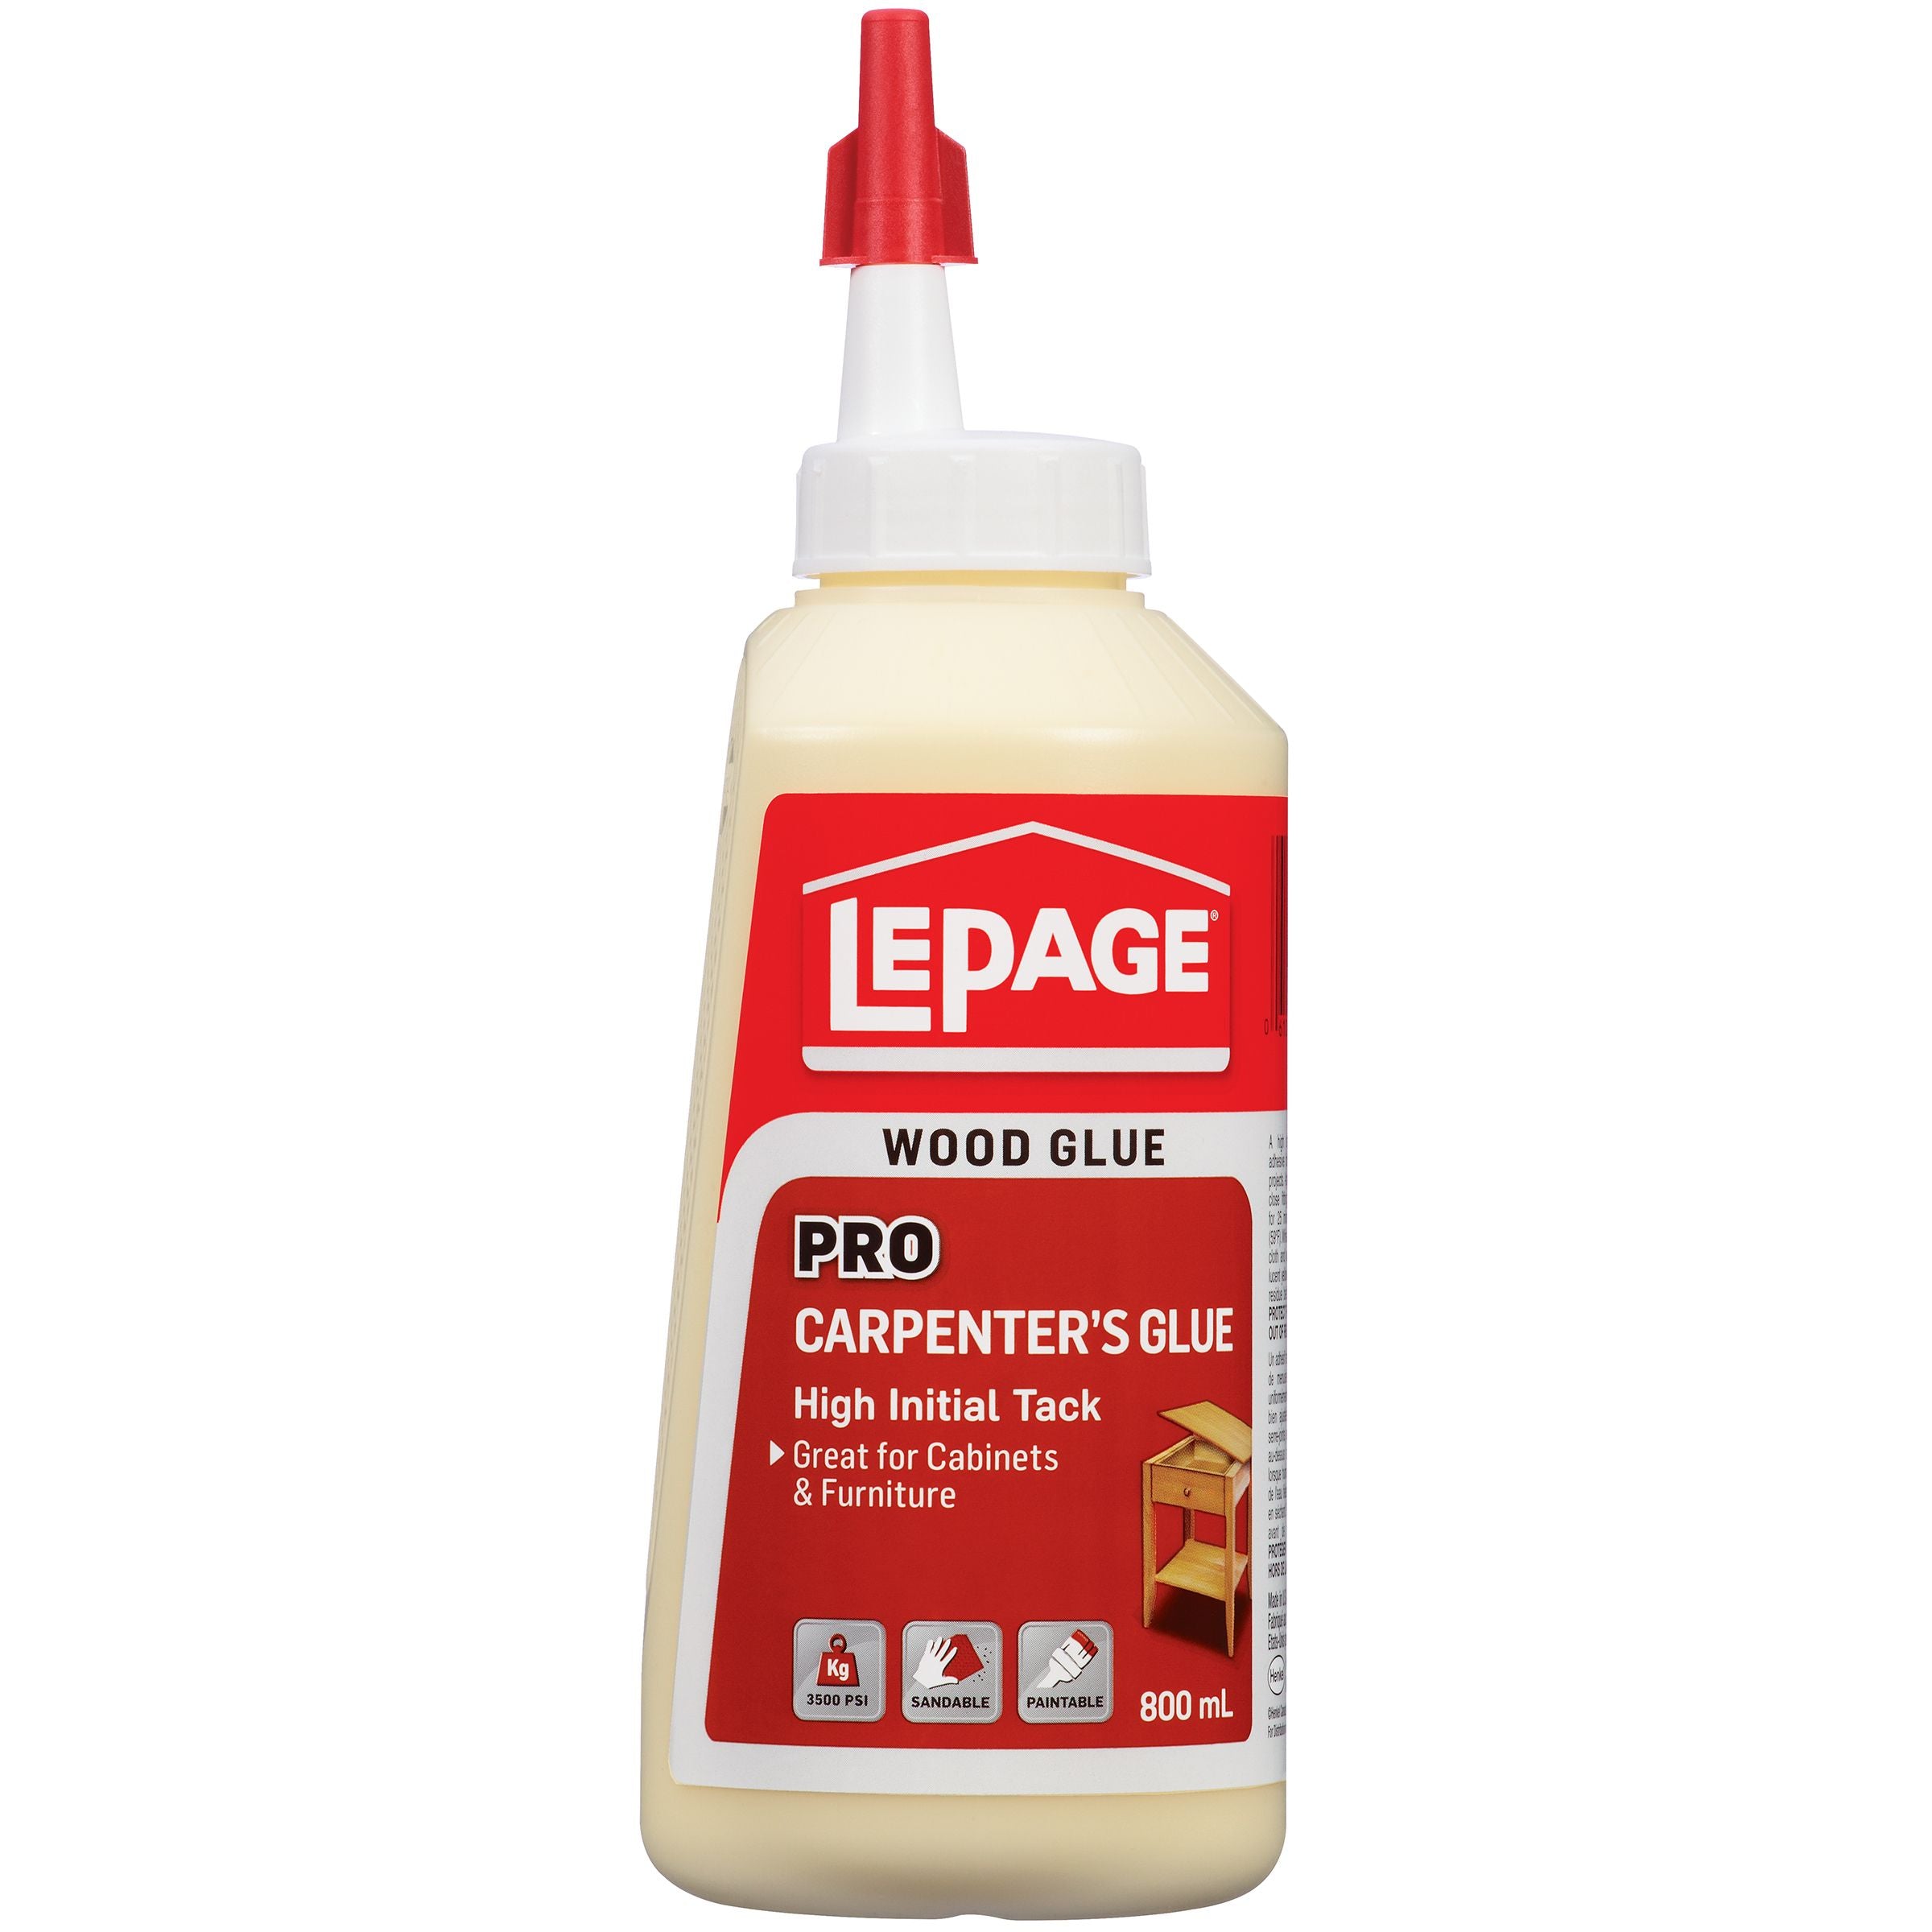 LePage Pro Carpenter’s Glue, Translucent Pale Yellow, 800 ml Bottle, Pack of 1